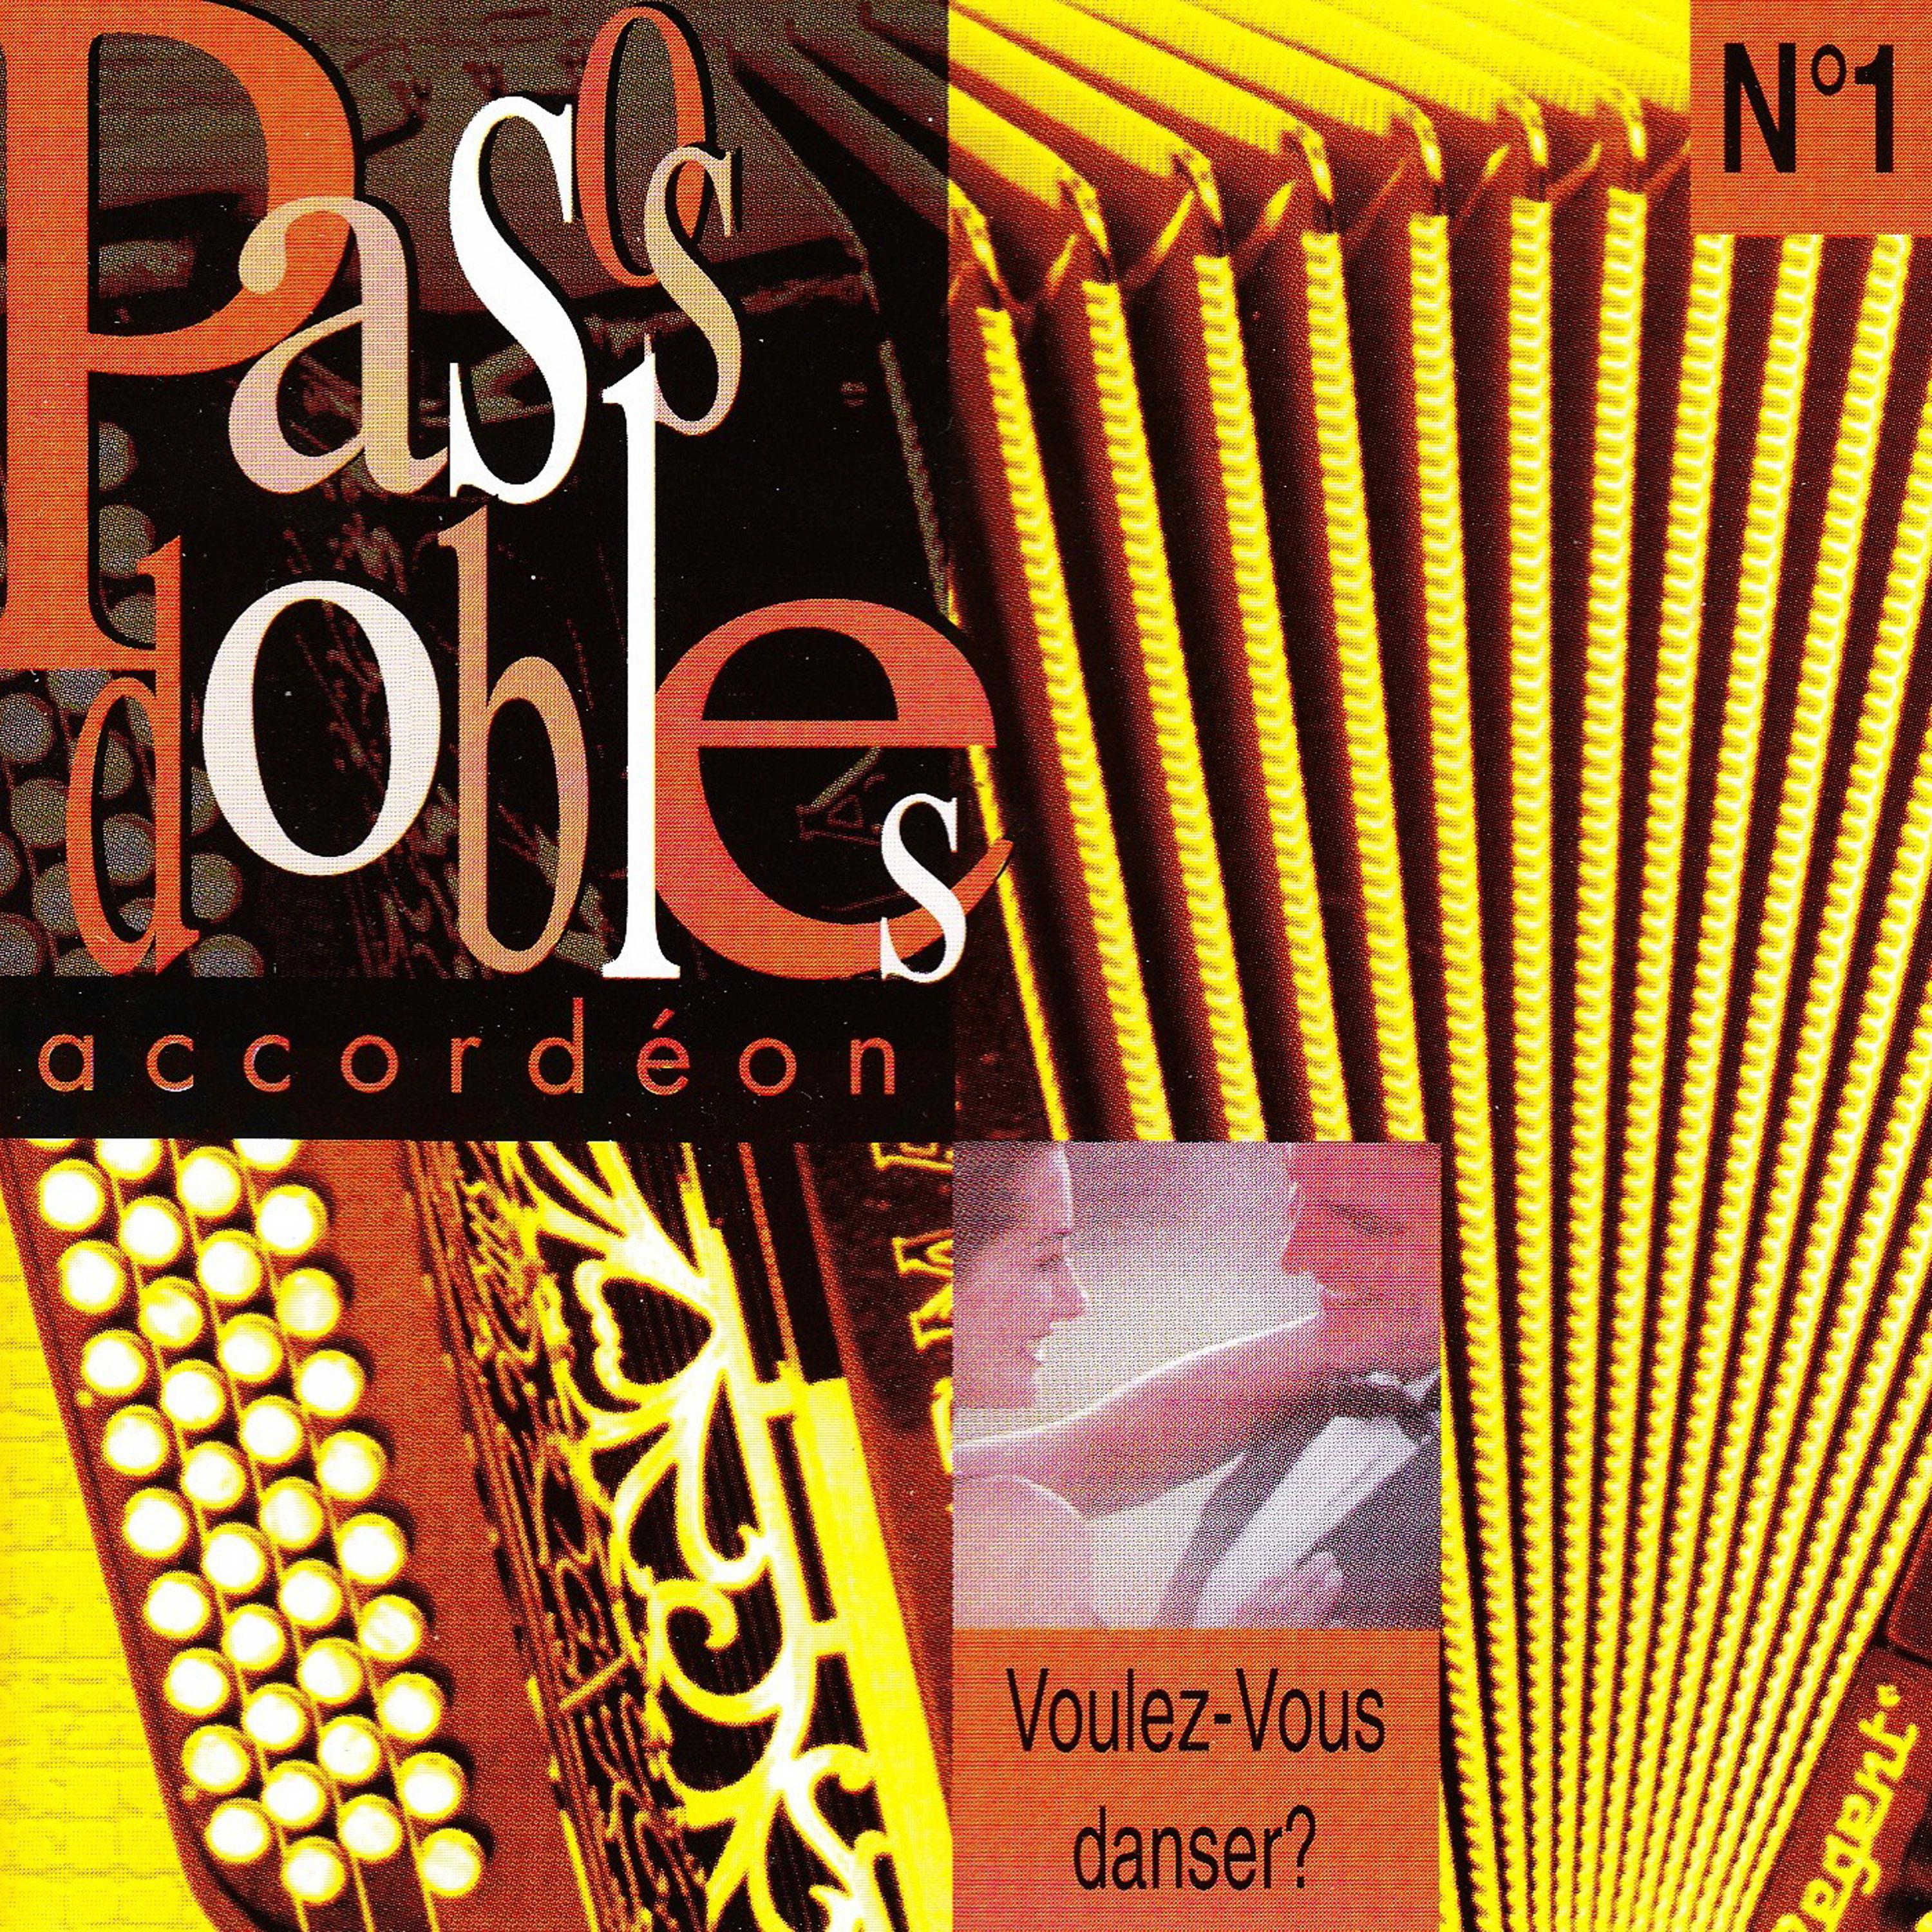 Paso Dobles (Accordion Ballroom Dance Music), Vol. 1